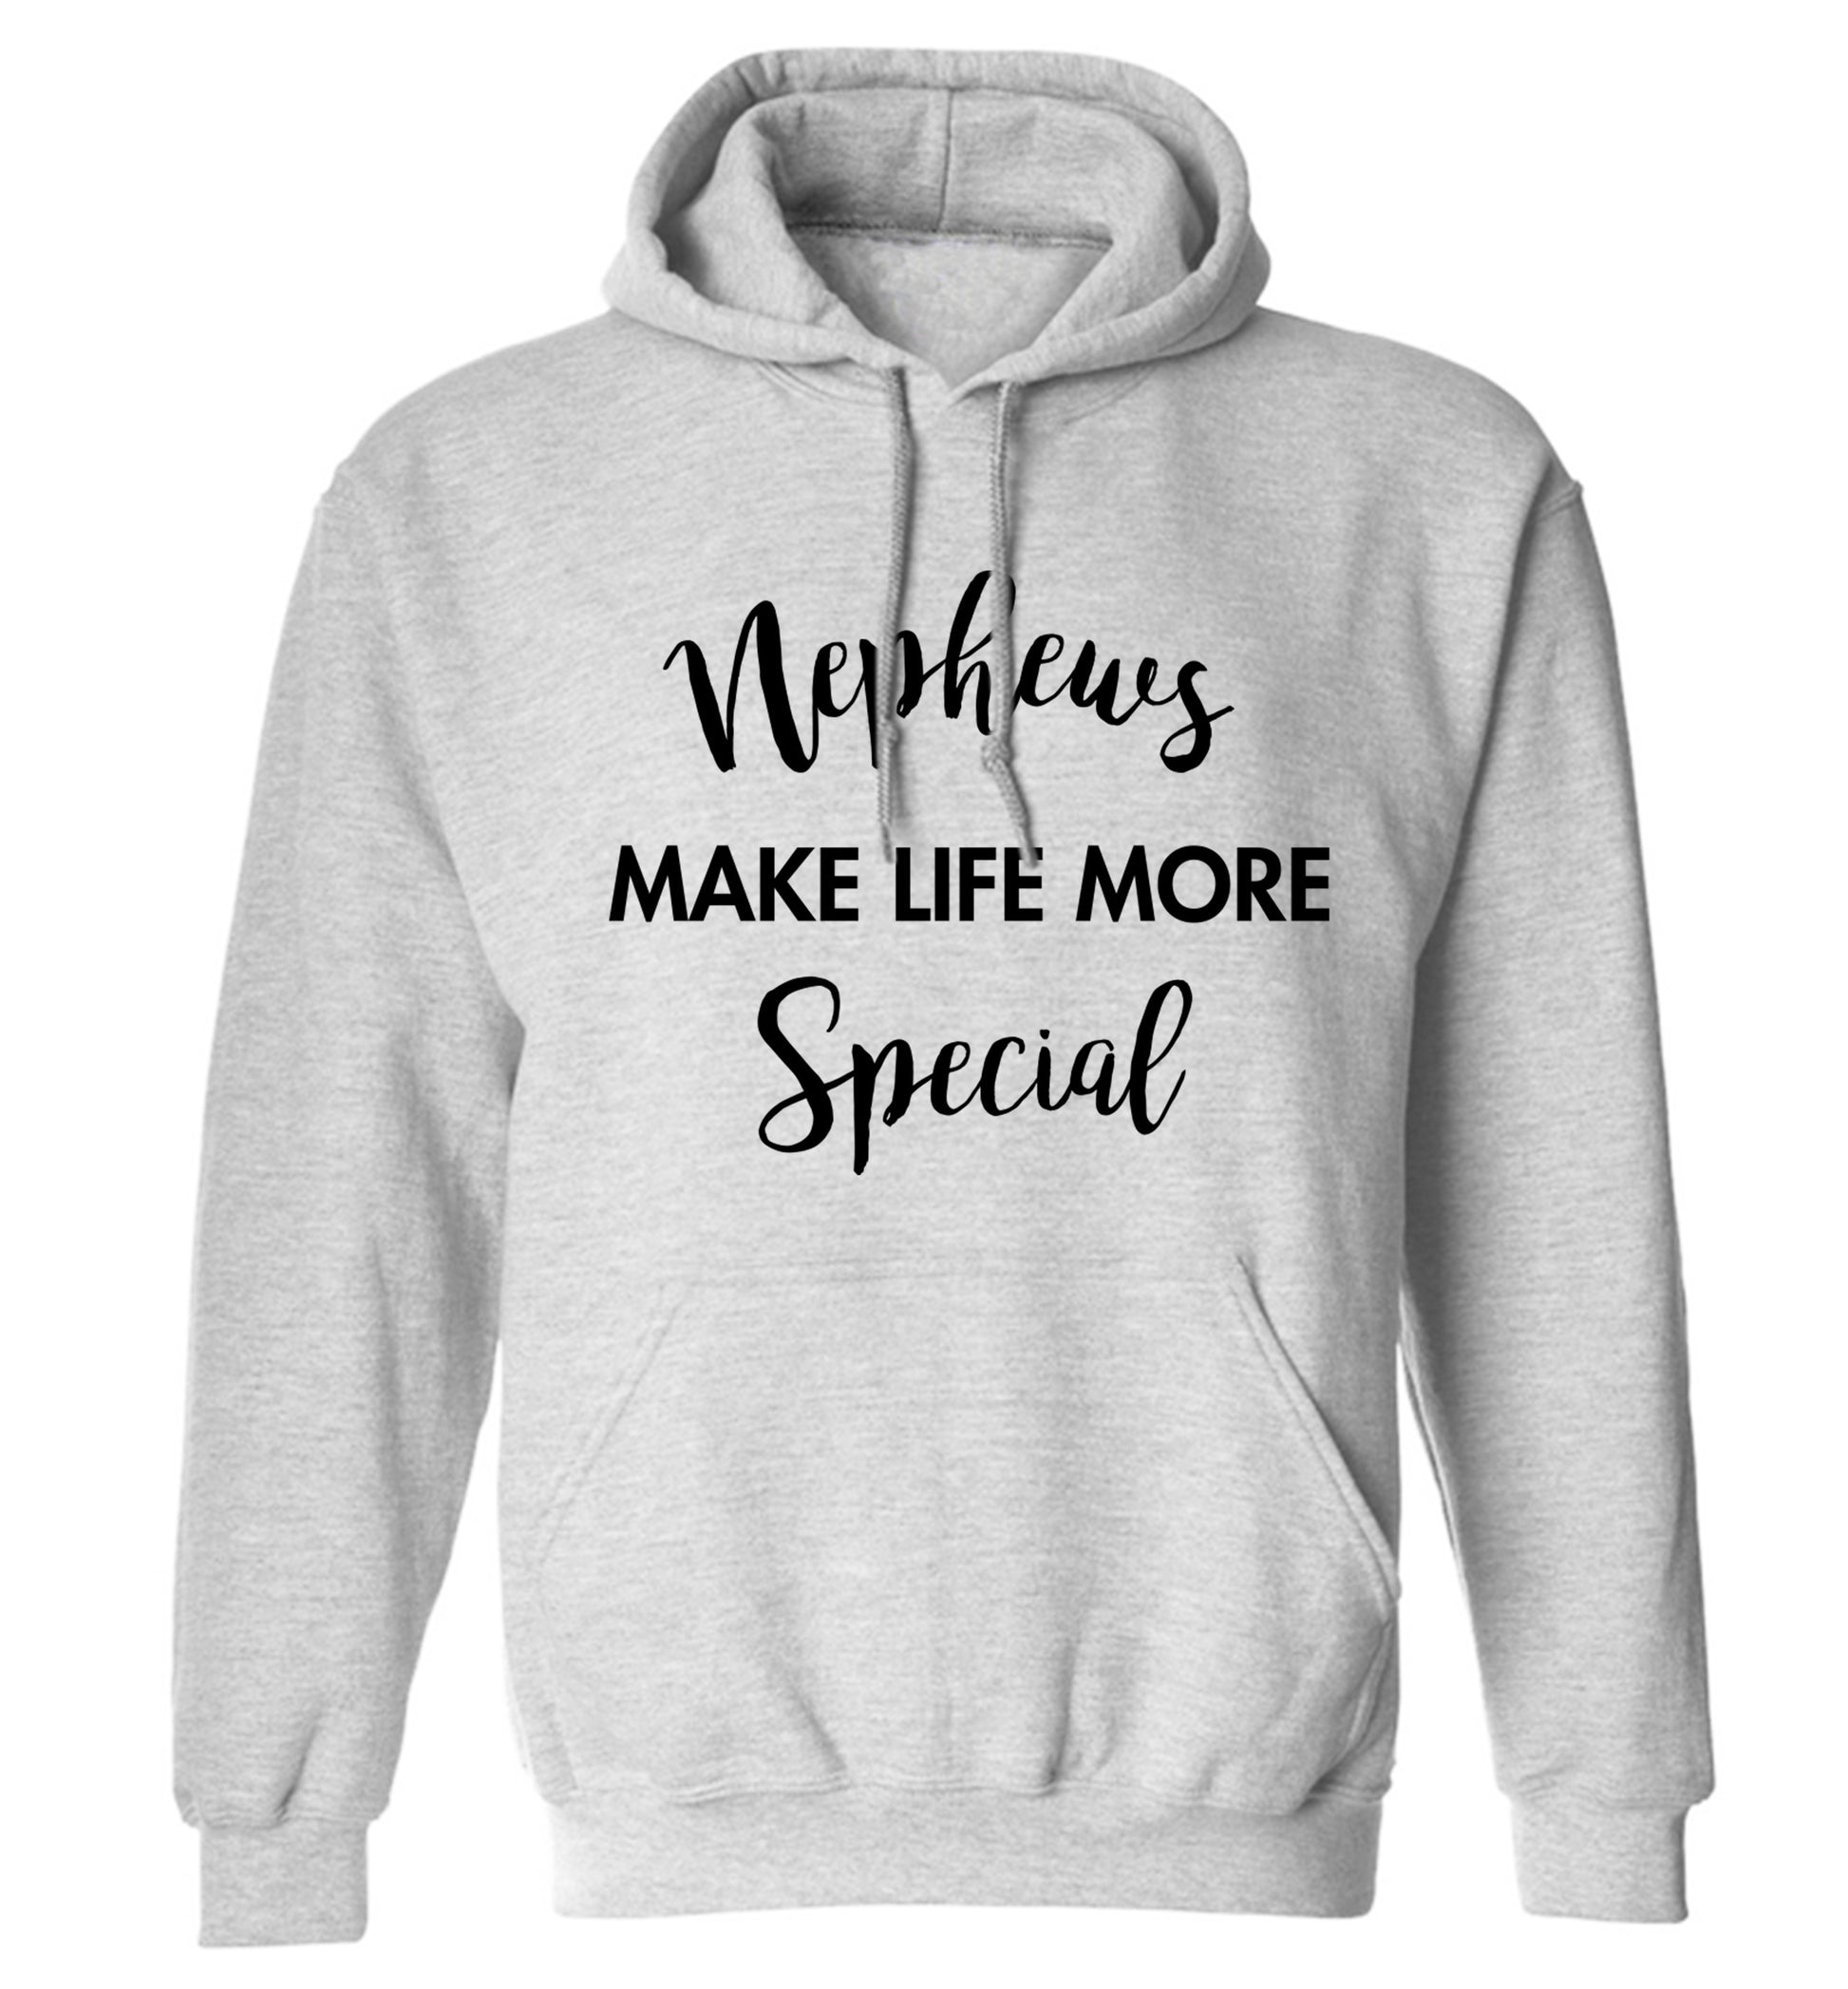 Nephews make life more special adults unisex grey hoodie 2XL